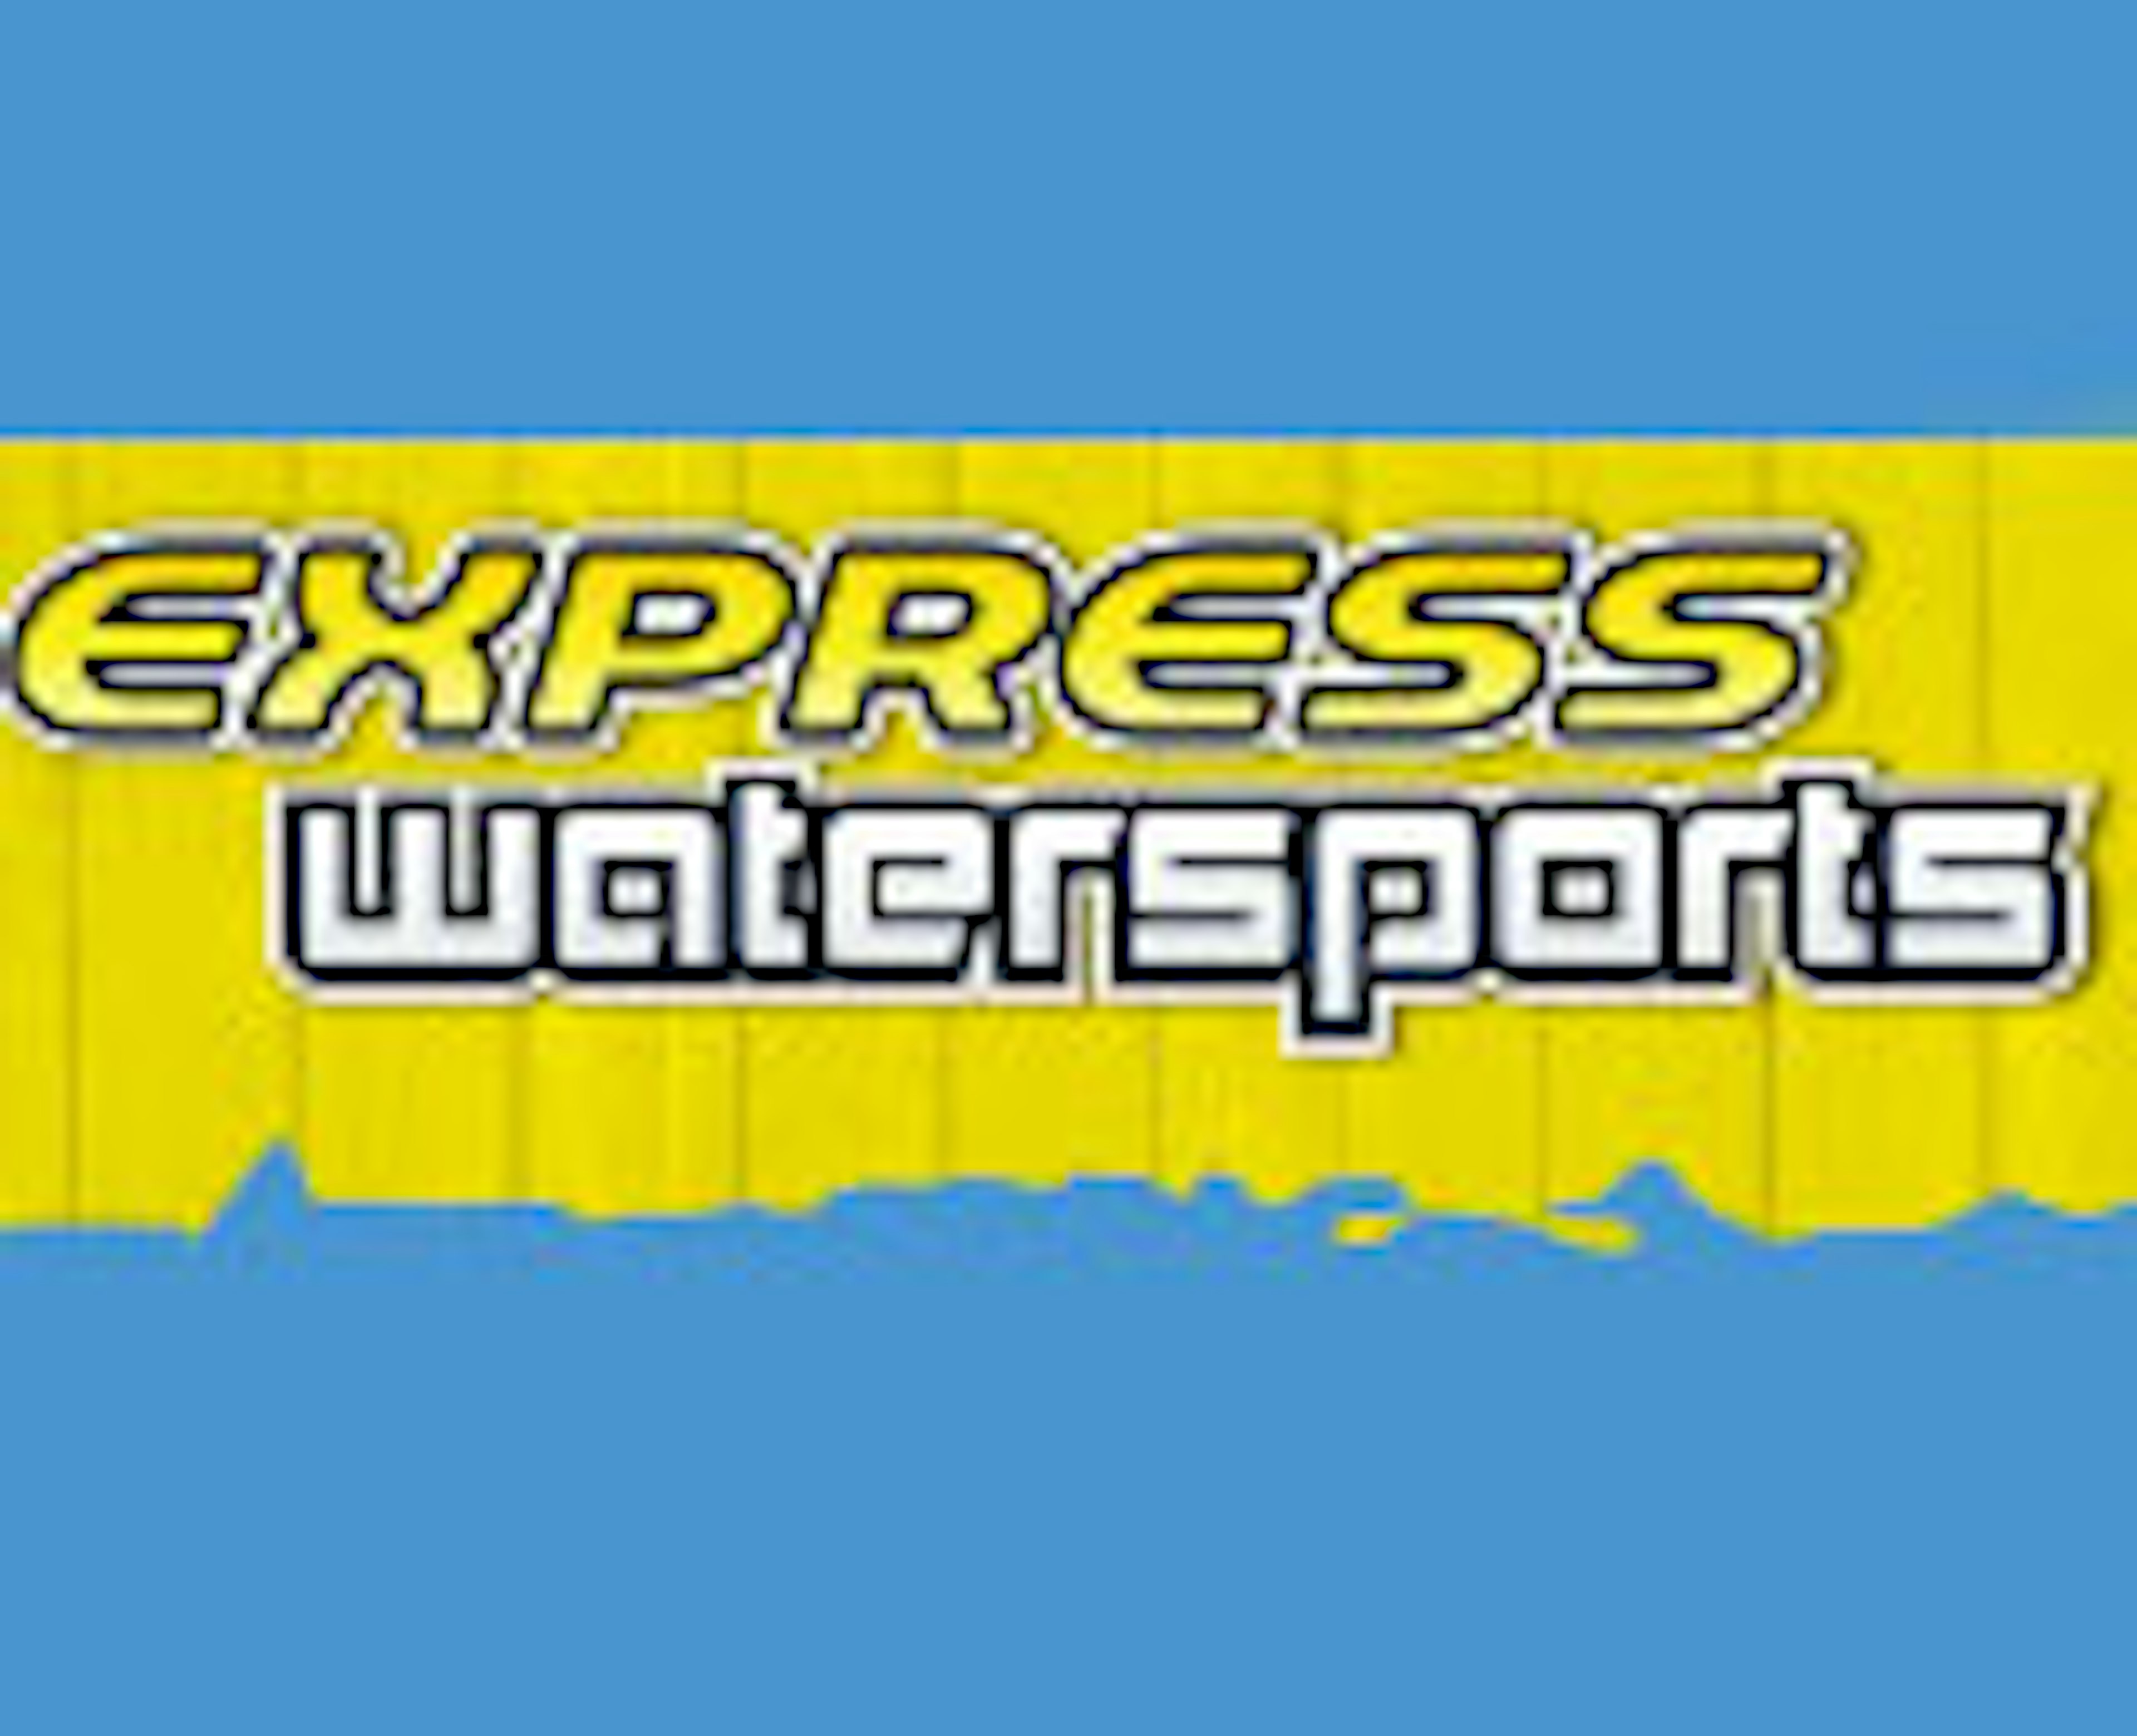 Express Watersports